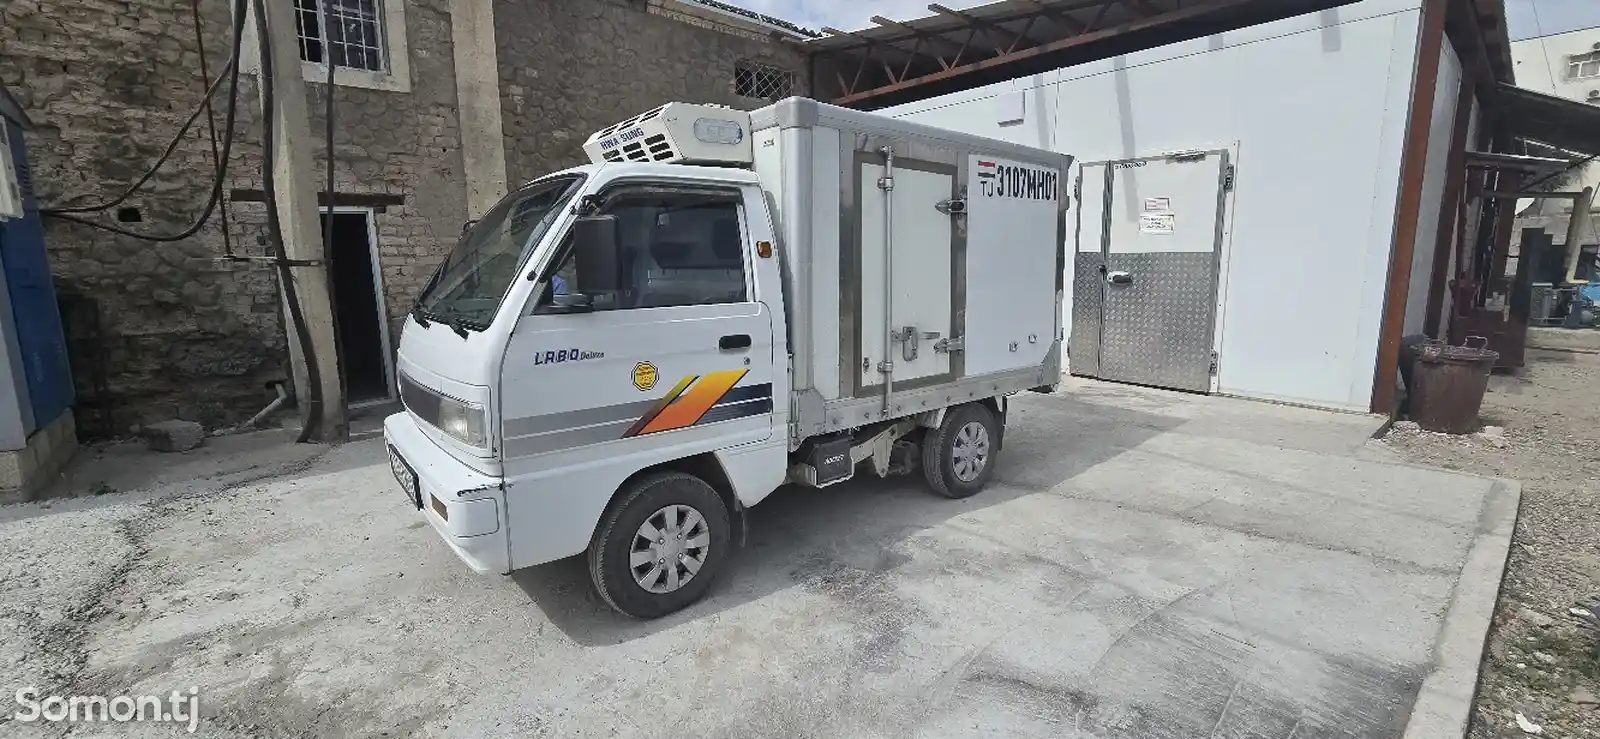 Бортовой грузовик Daewoo labo, 2013-2